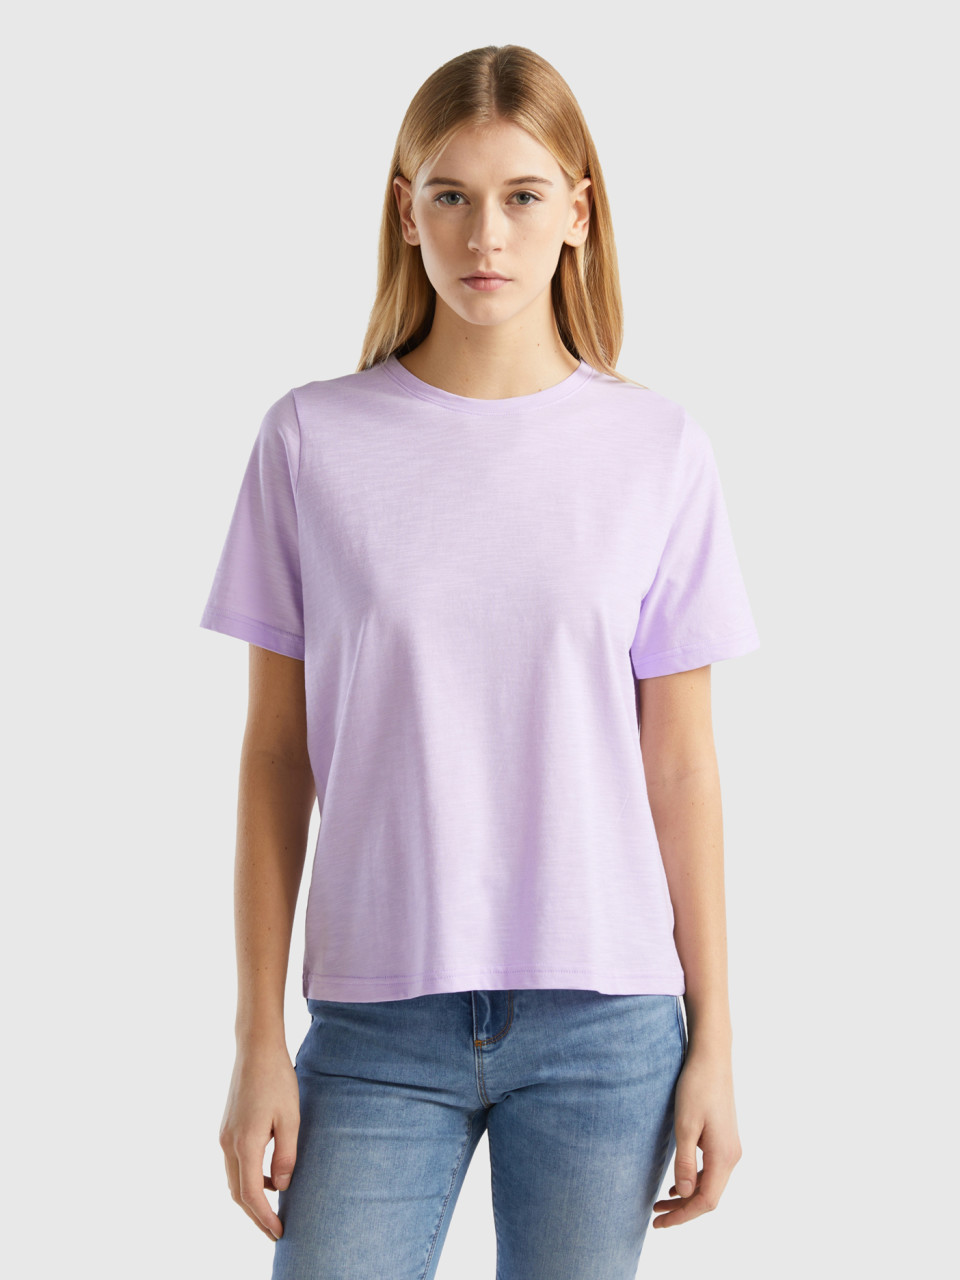 Benetton, Crew Neck T-shirt In Slub Cotton, Lilac, Women